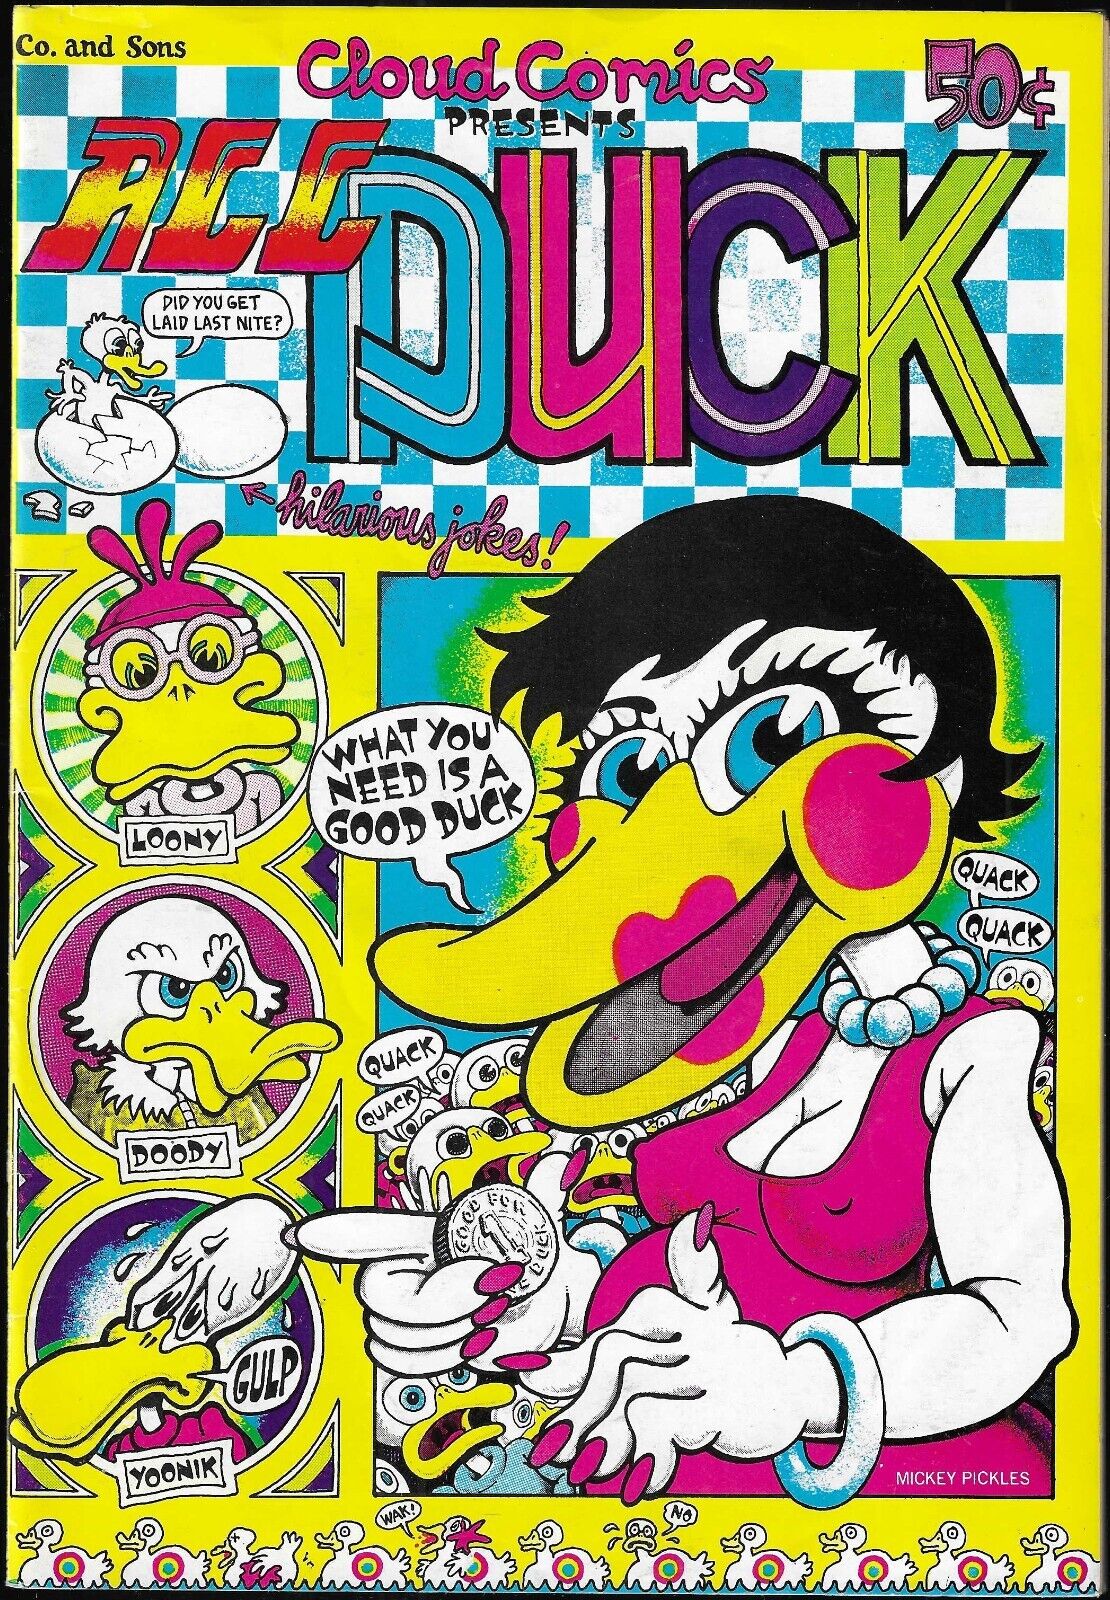 ALL DUCK #1 - B&W funny animal comic (Co. & Sons, 1972) - high grade